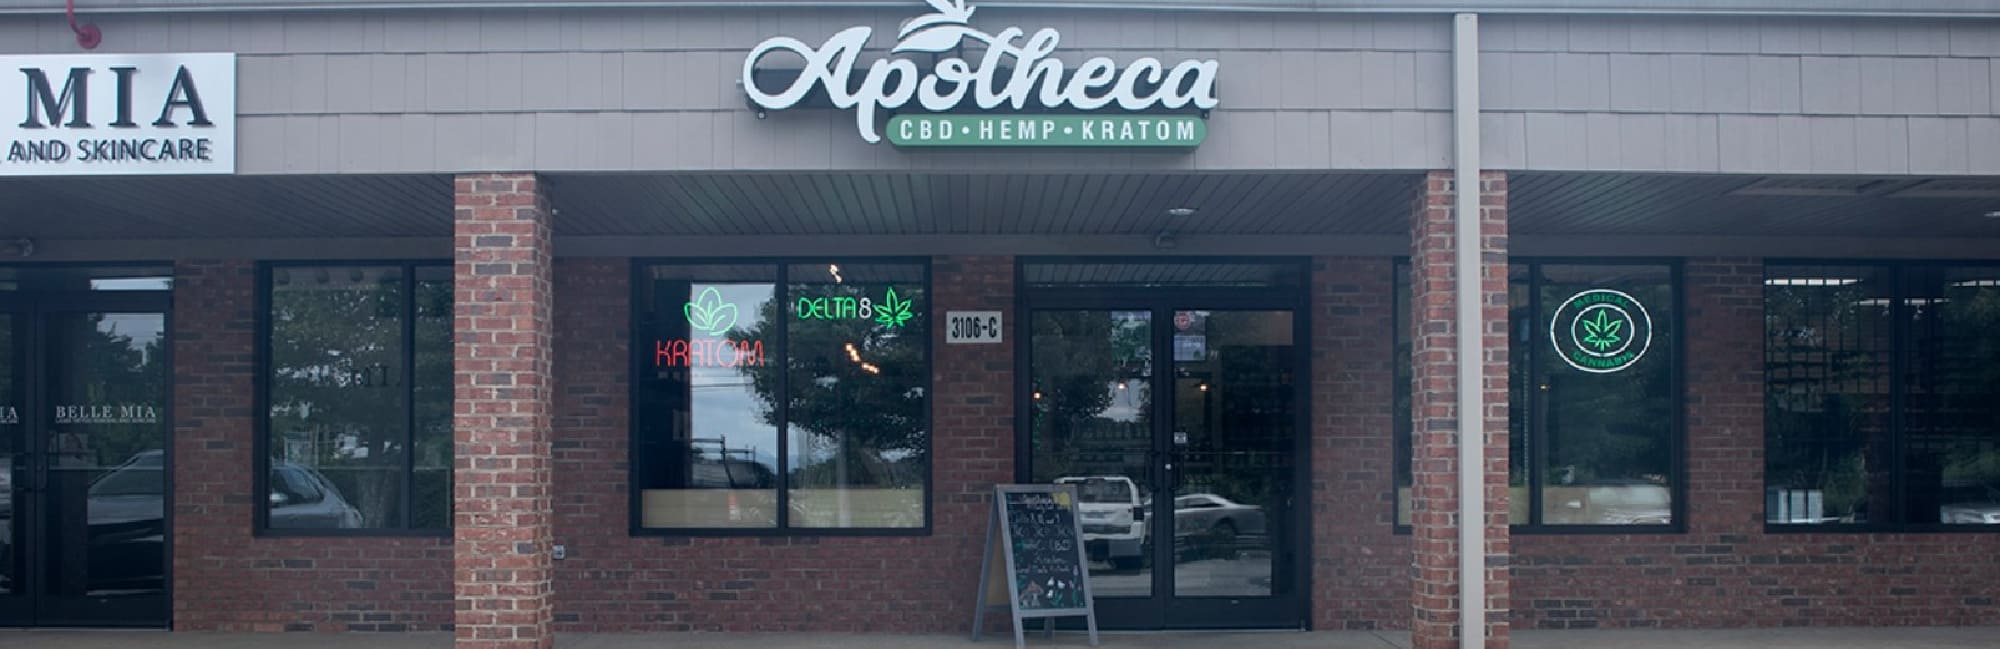 image of apotheca smoke shop in asheville nc